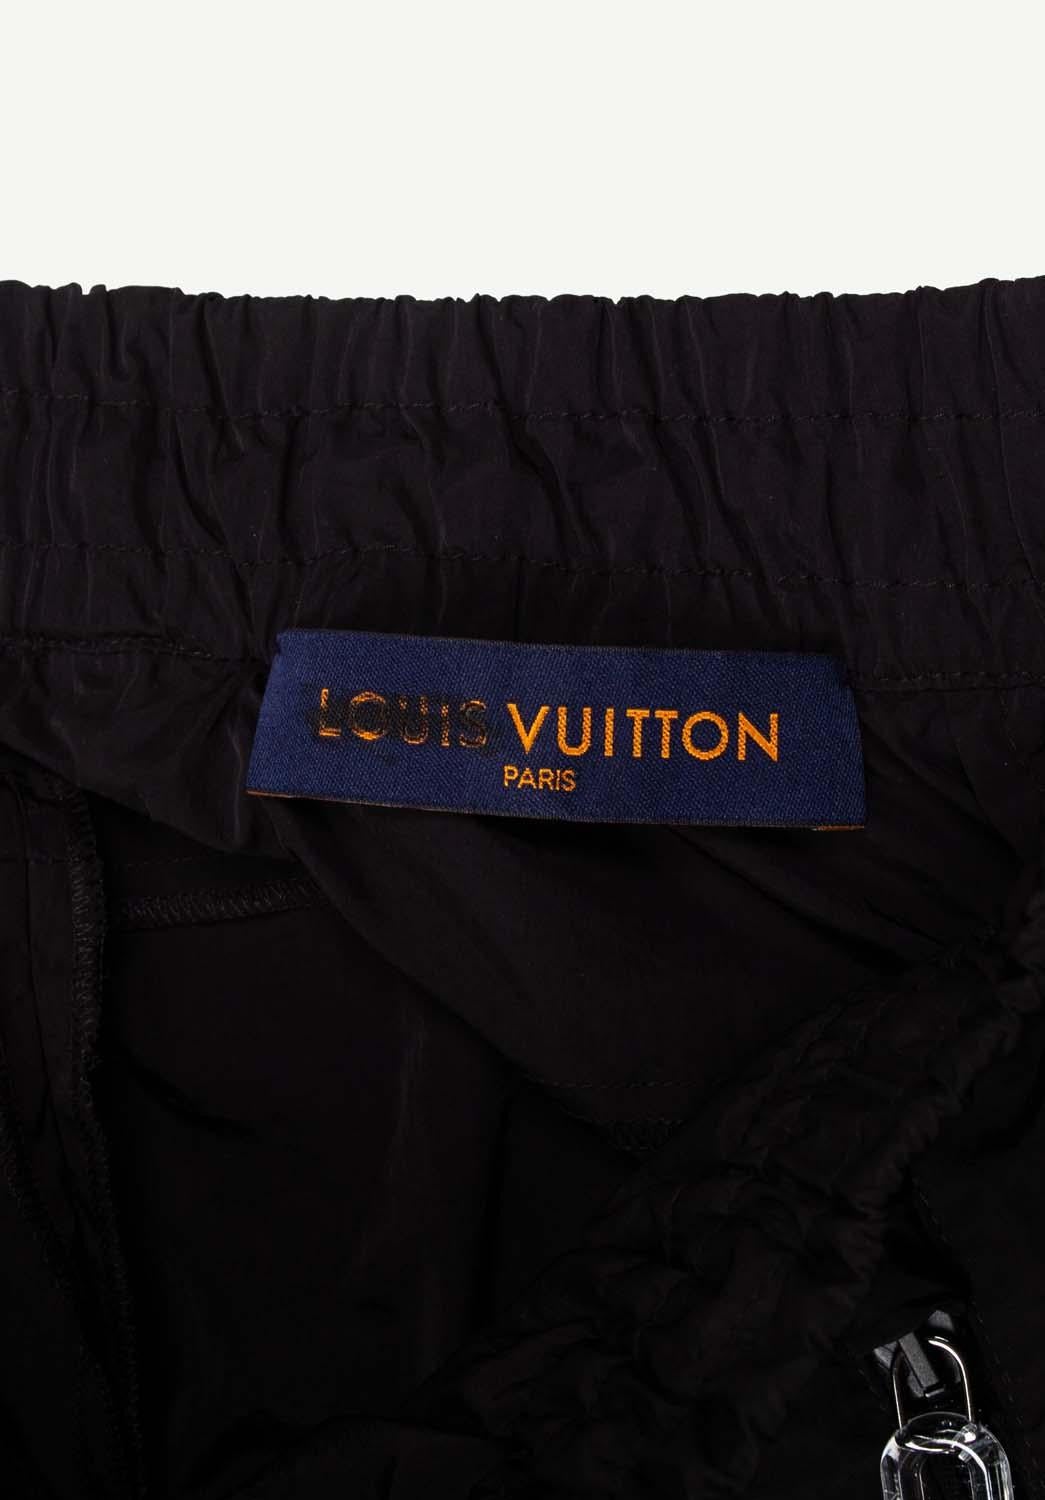 Authentic Louis Vuitton Men Shorts Size 40 (Large) S220 In Excellent Condition For Sale In Kaunas, LT